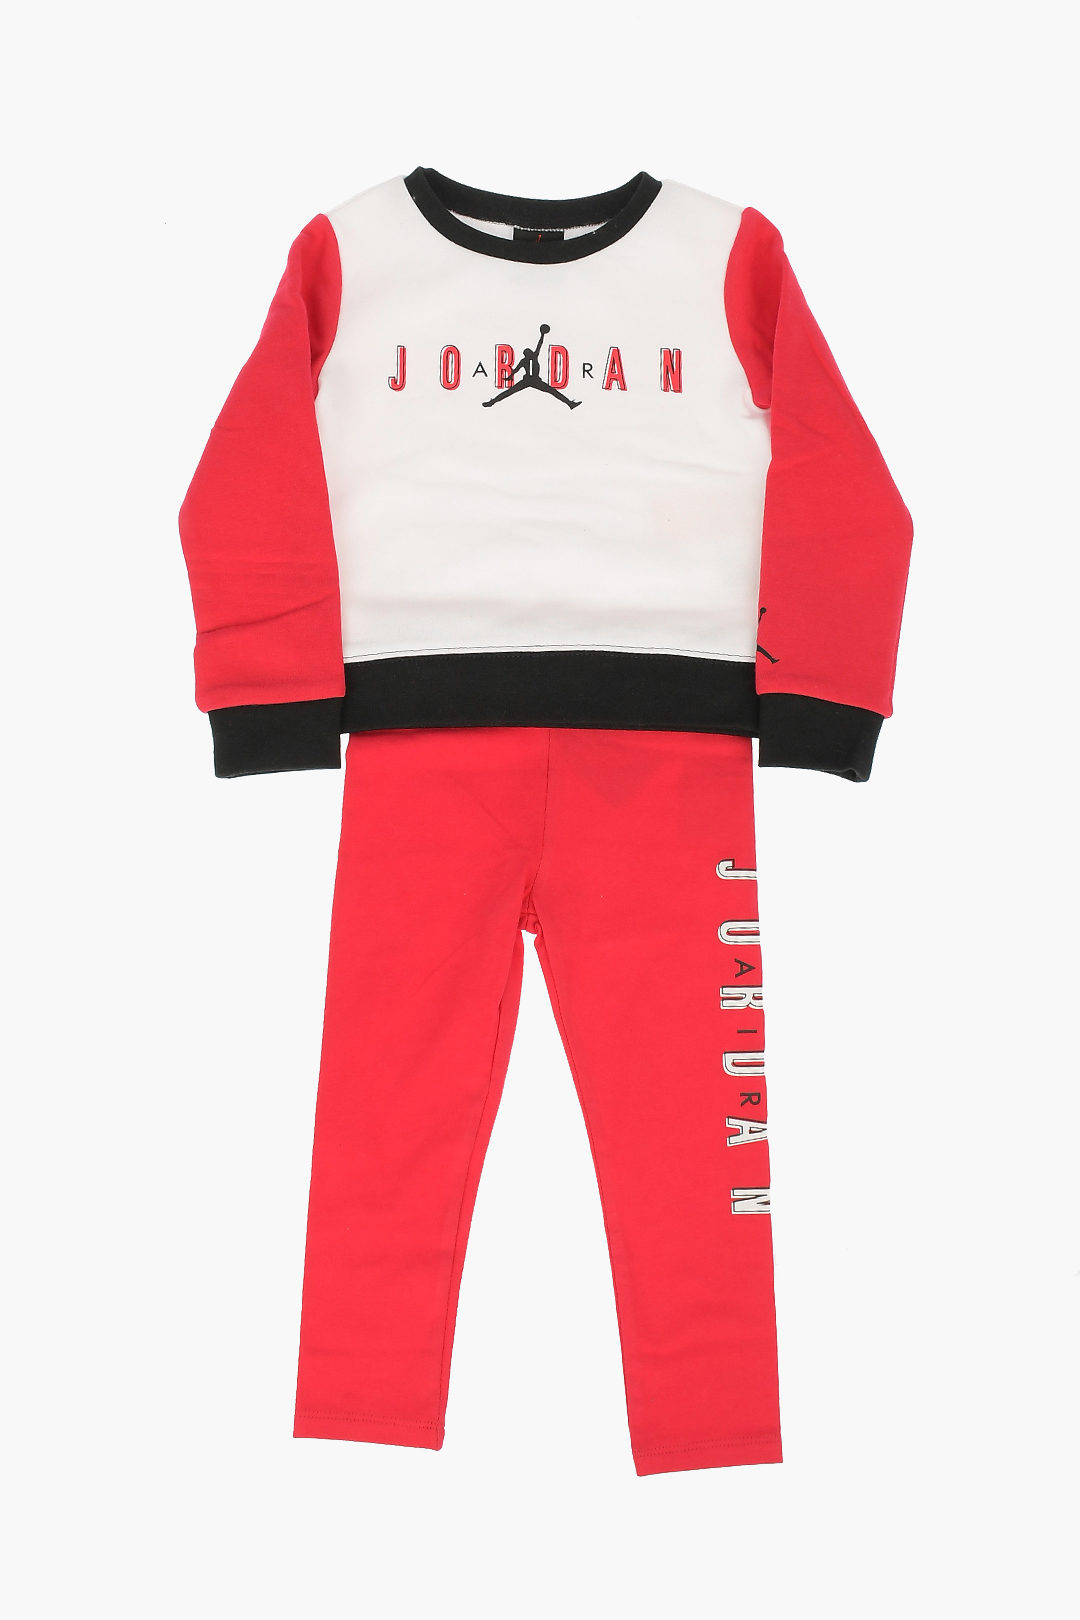 Nike KIDS AIR JORDAN Jogger and Sweatshirt Set boys - Glamood Outlet